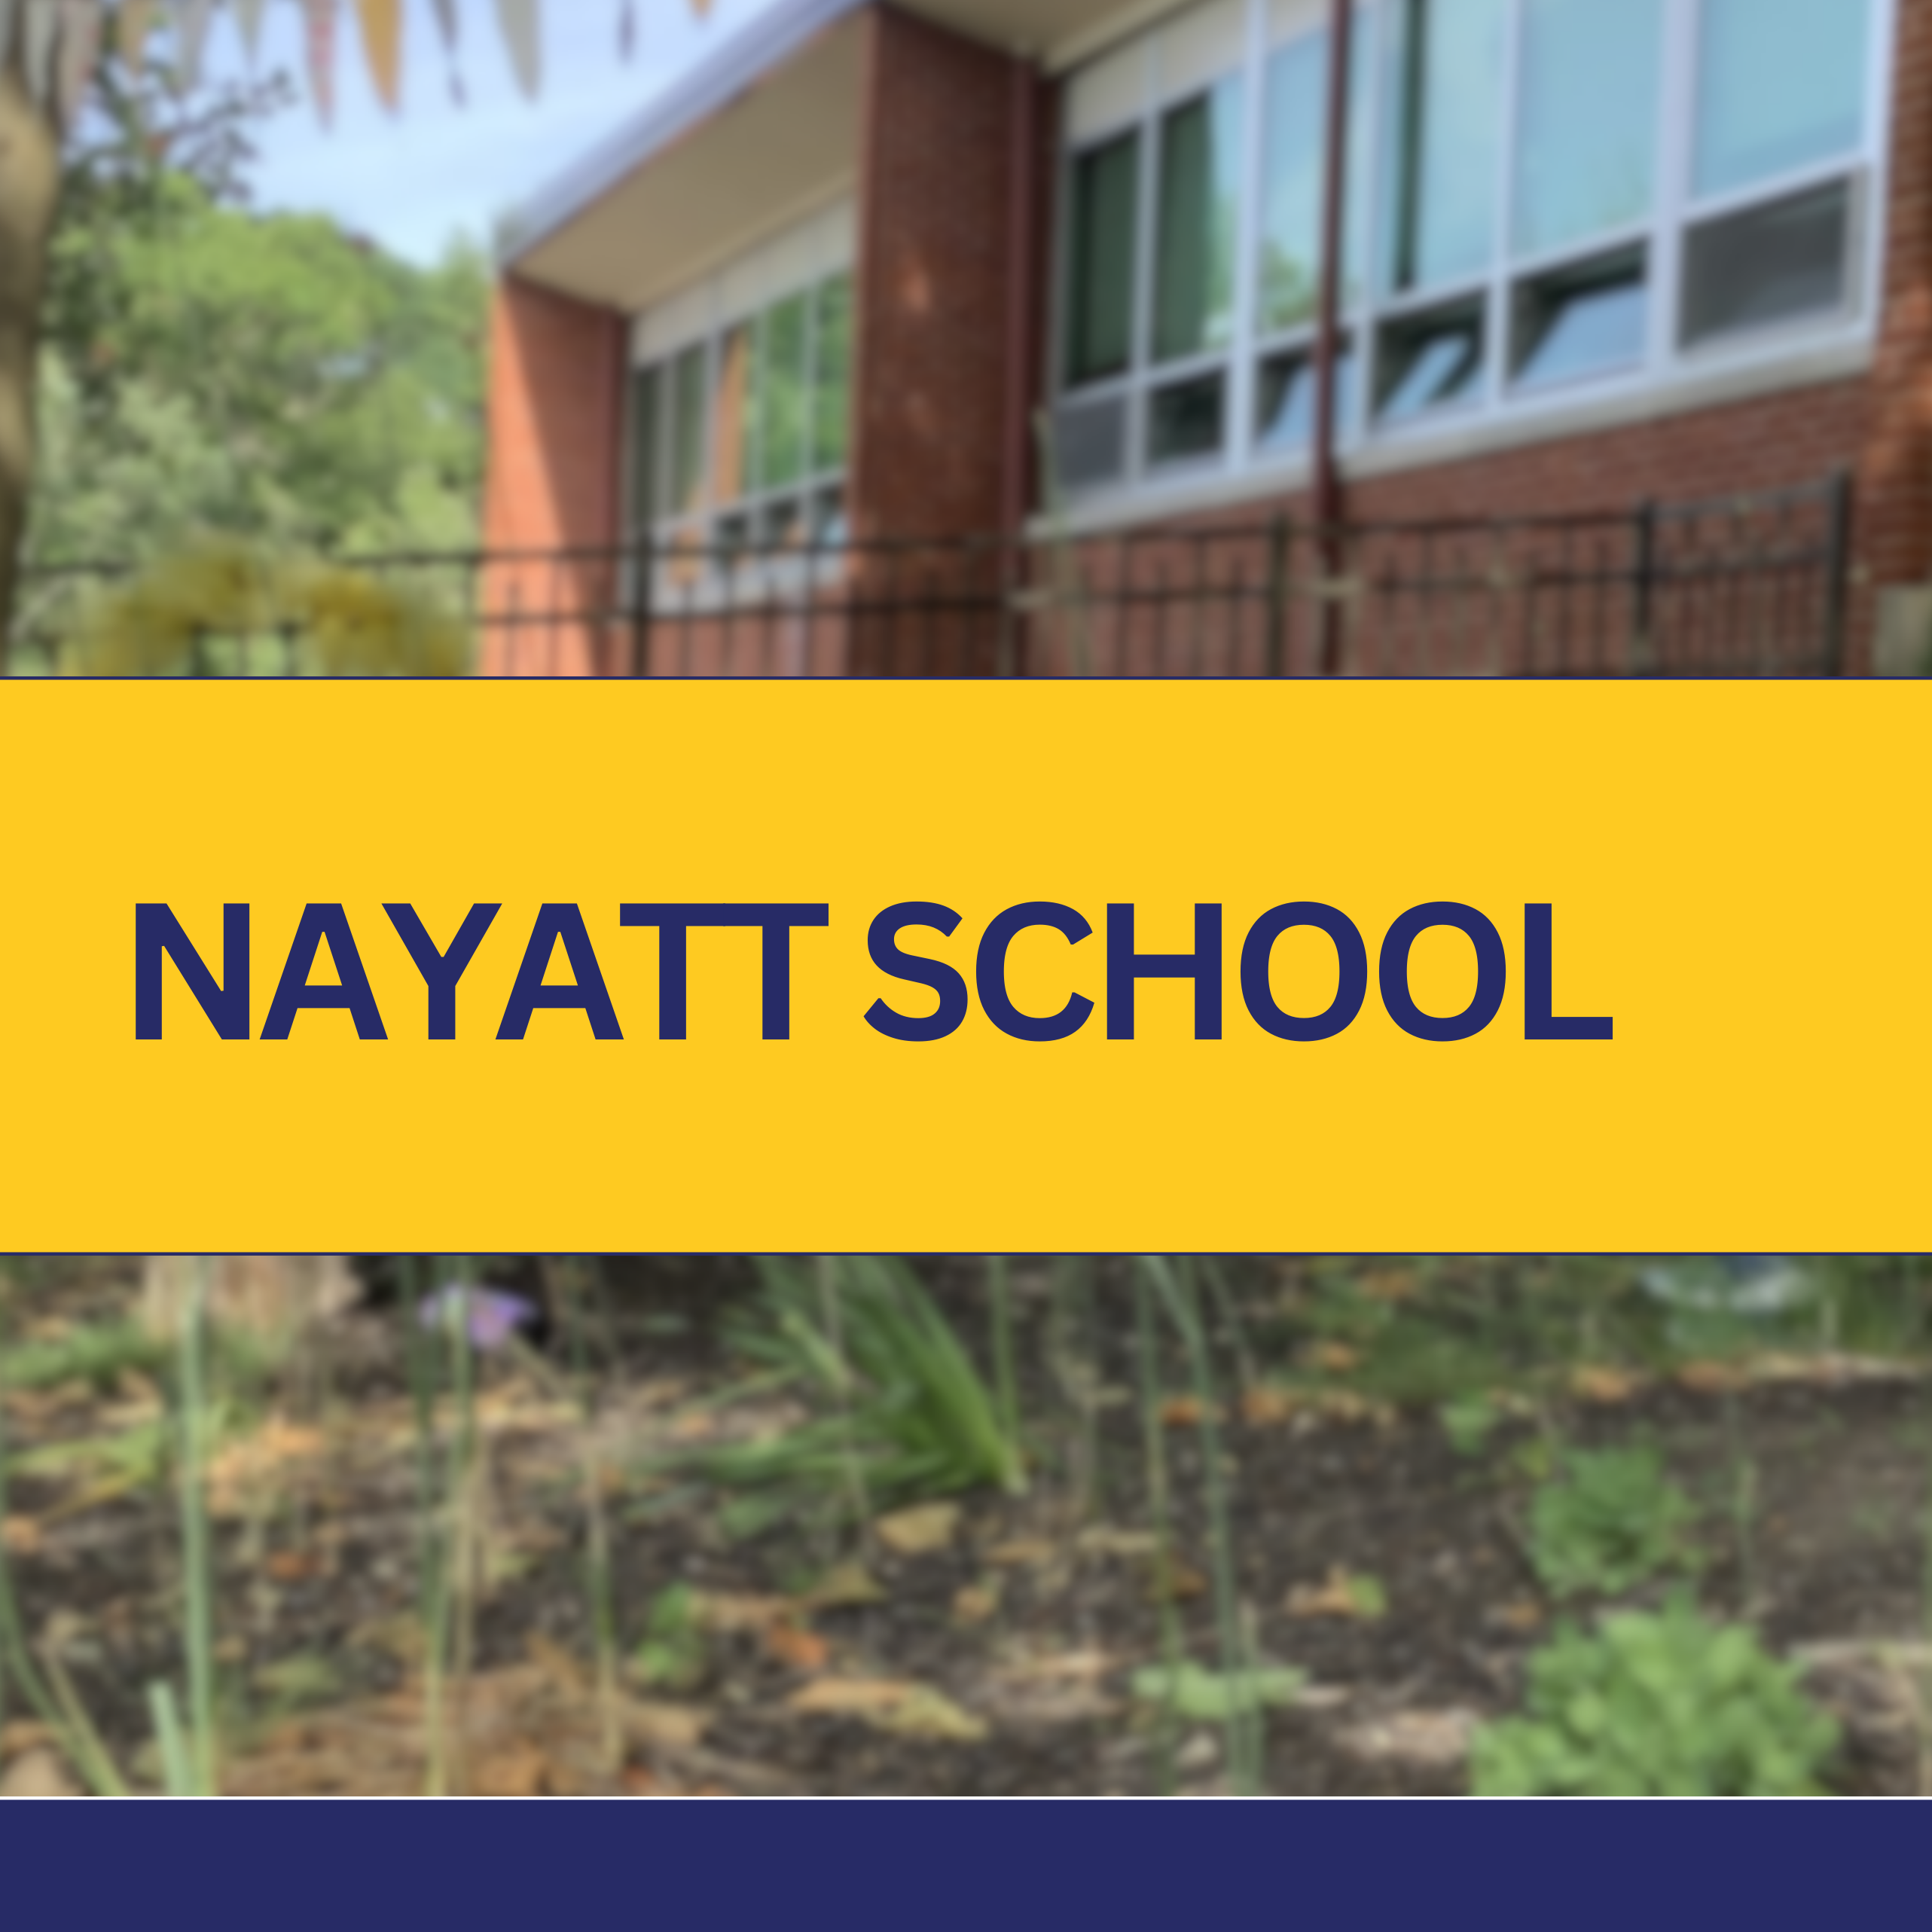 nayatt school